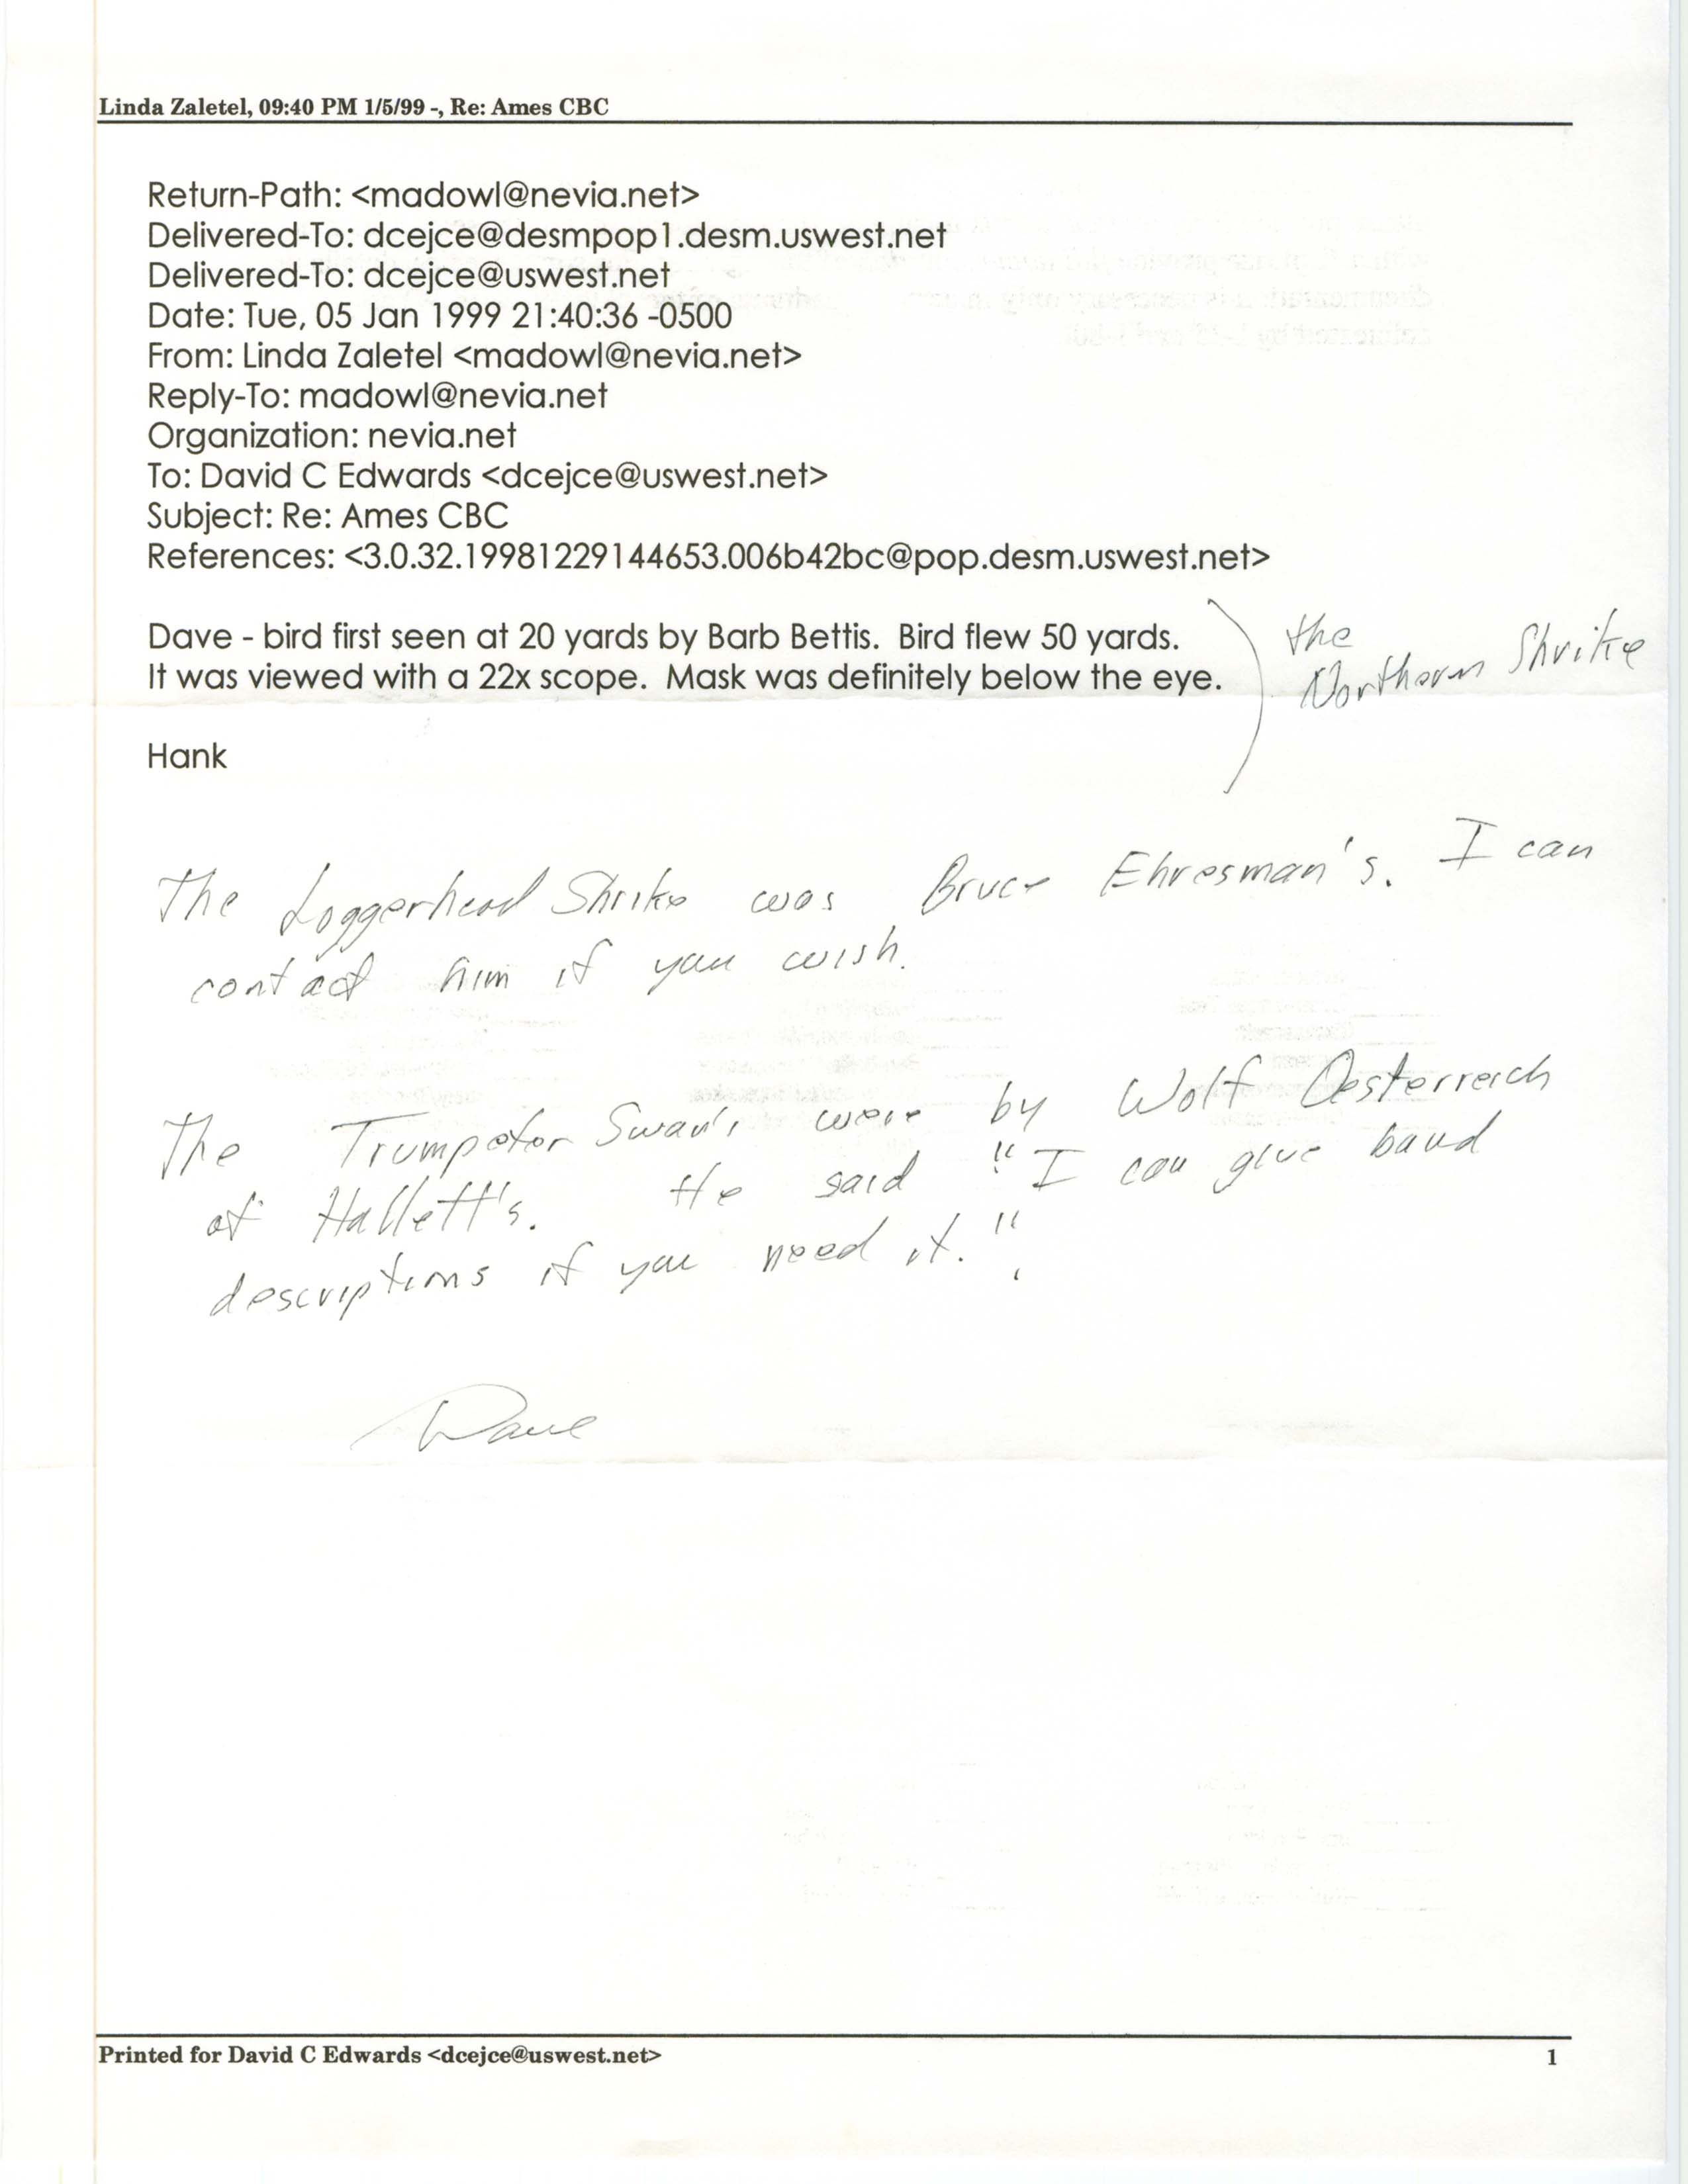 Hank Zaletel email to Dave Edwards regarding a Northern Shrike sighting, 1999